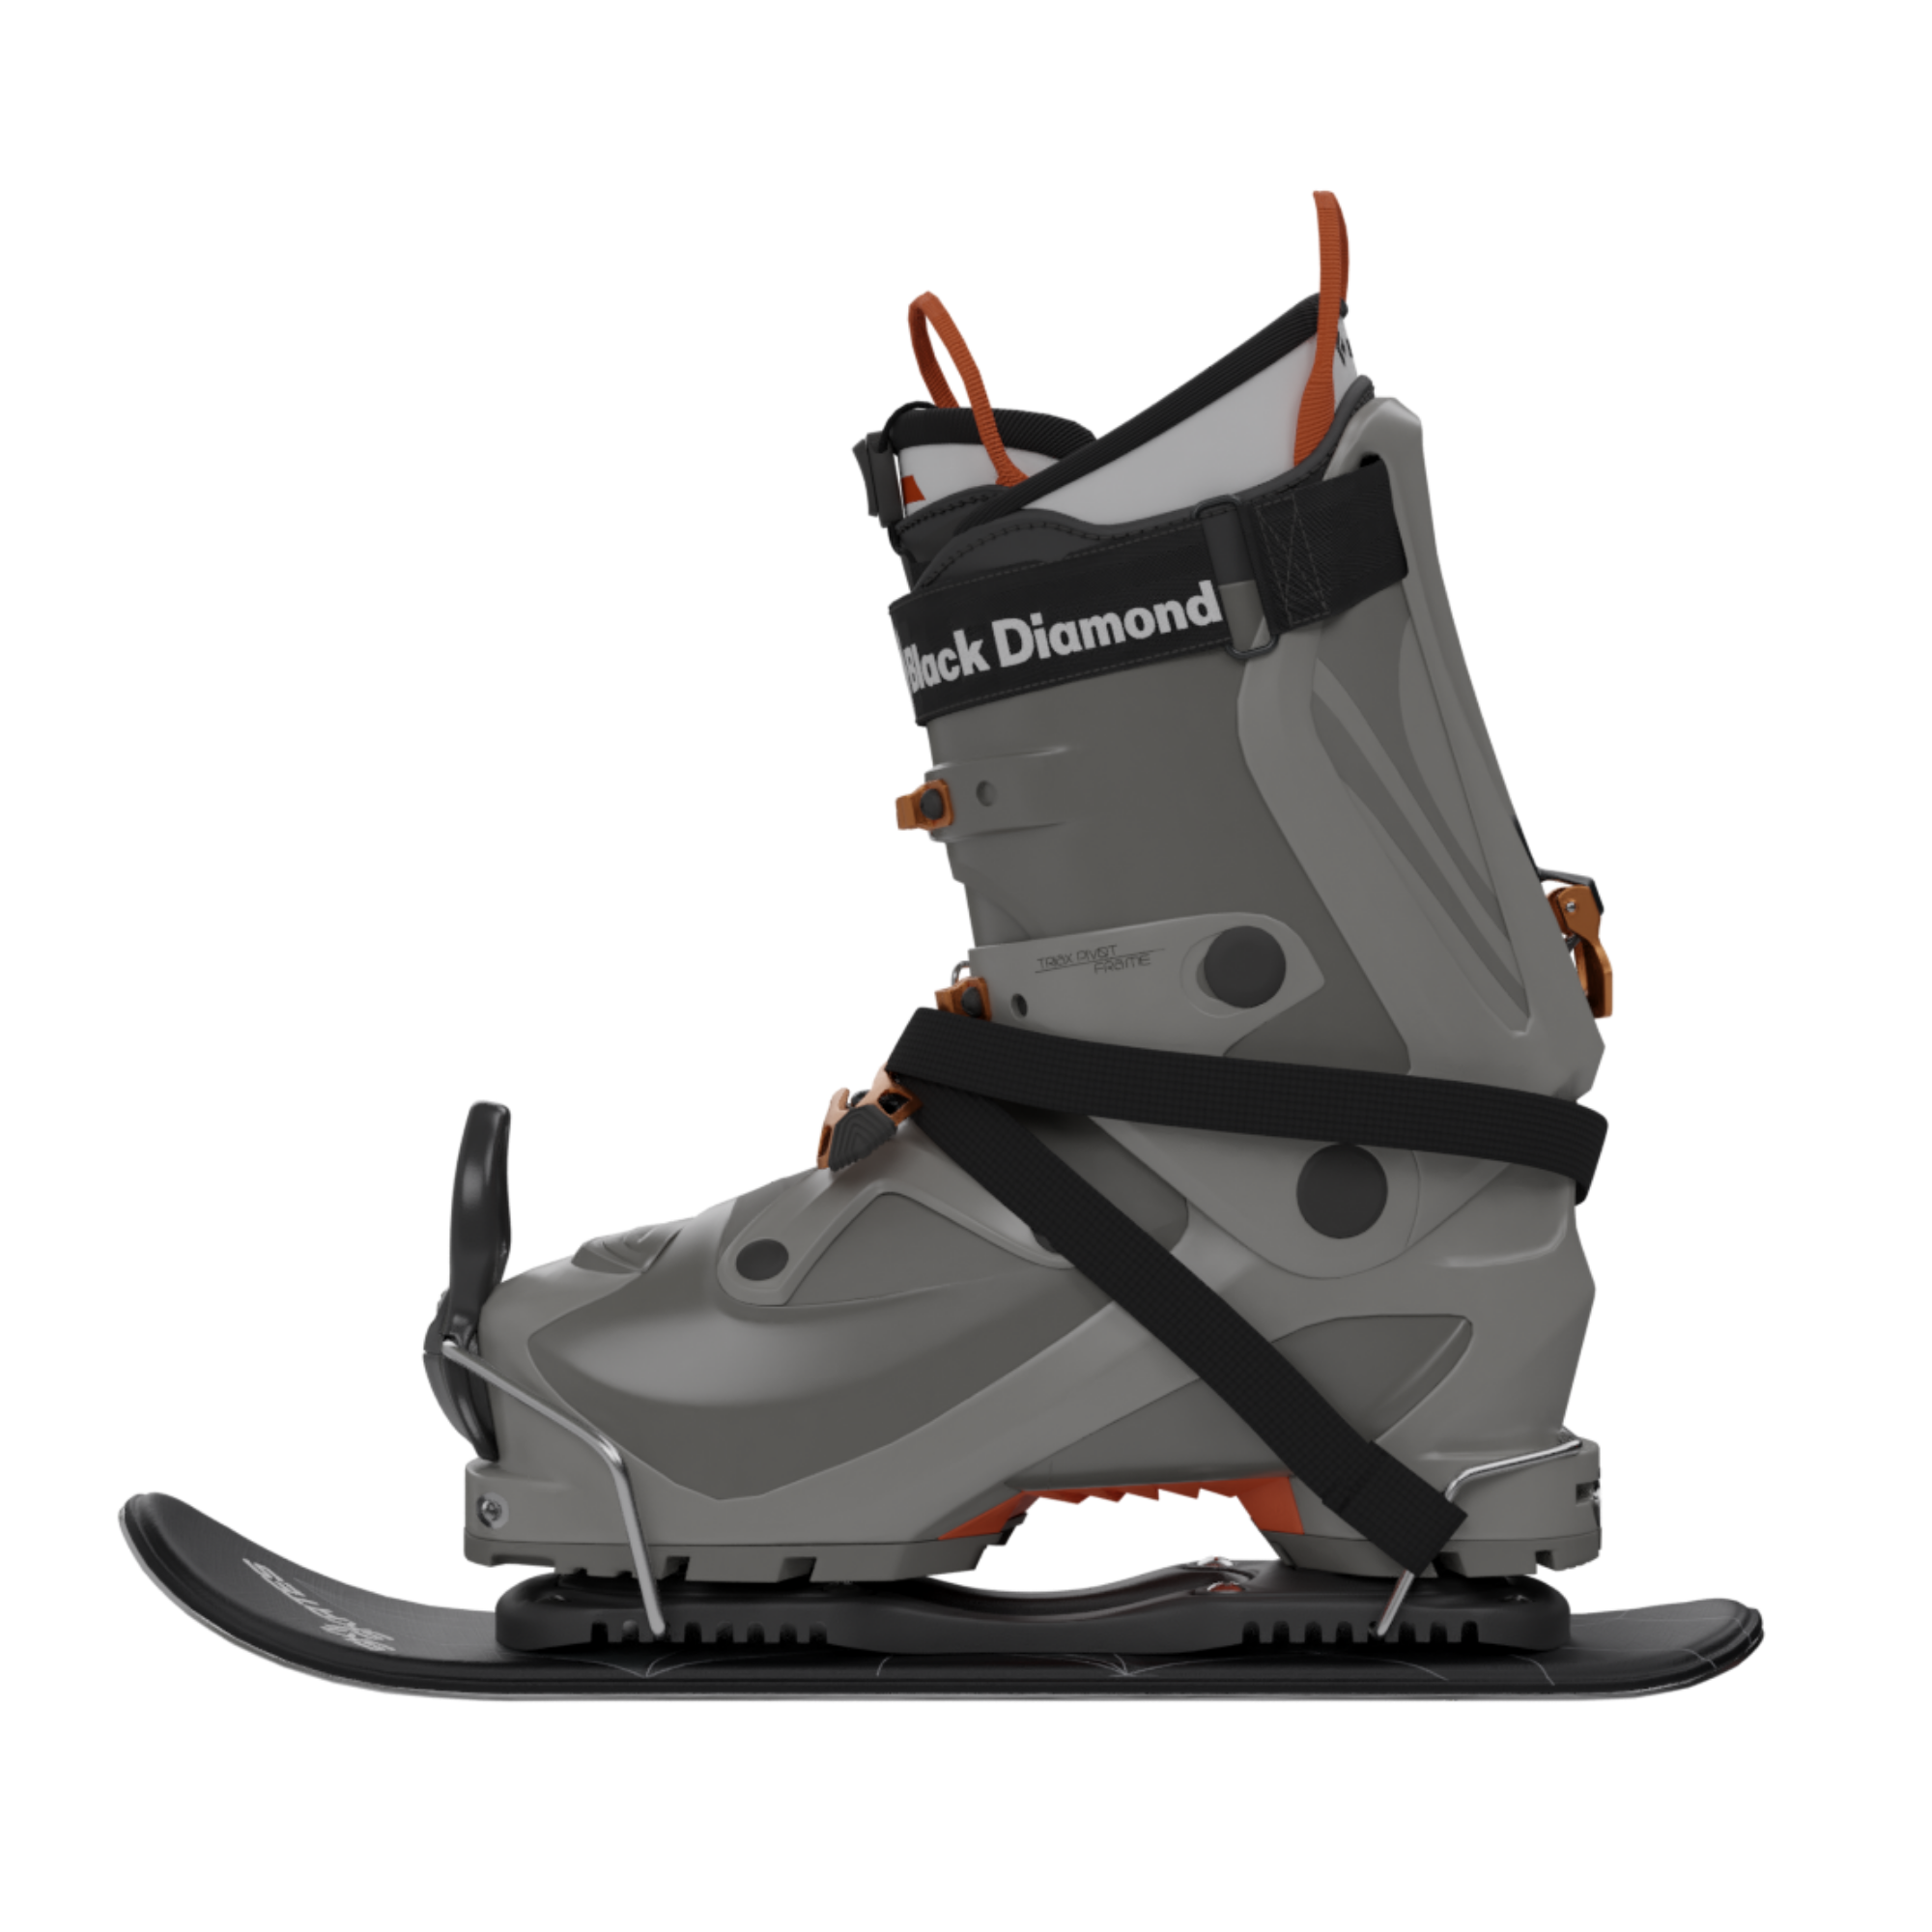 Skiskates - Mini Skis - Official Website - Reviews